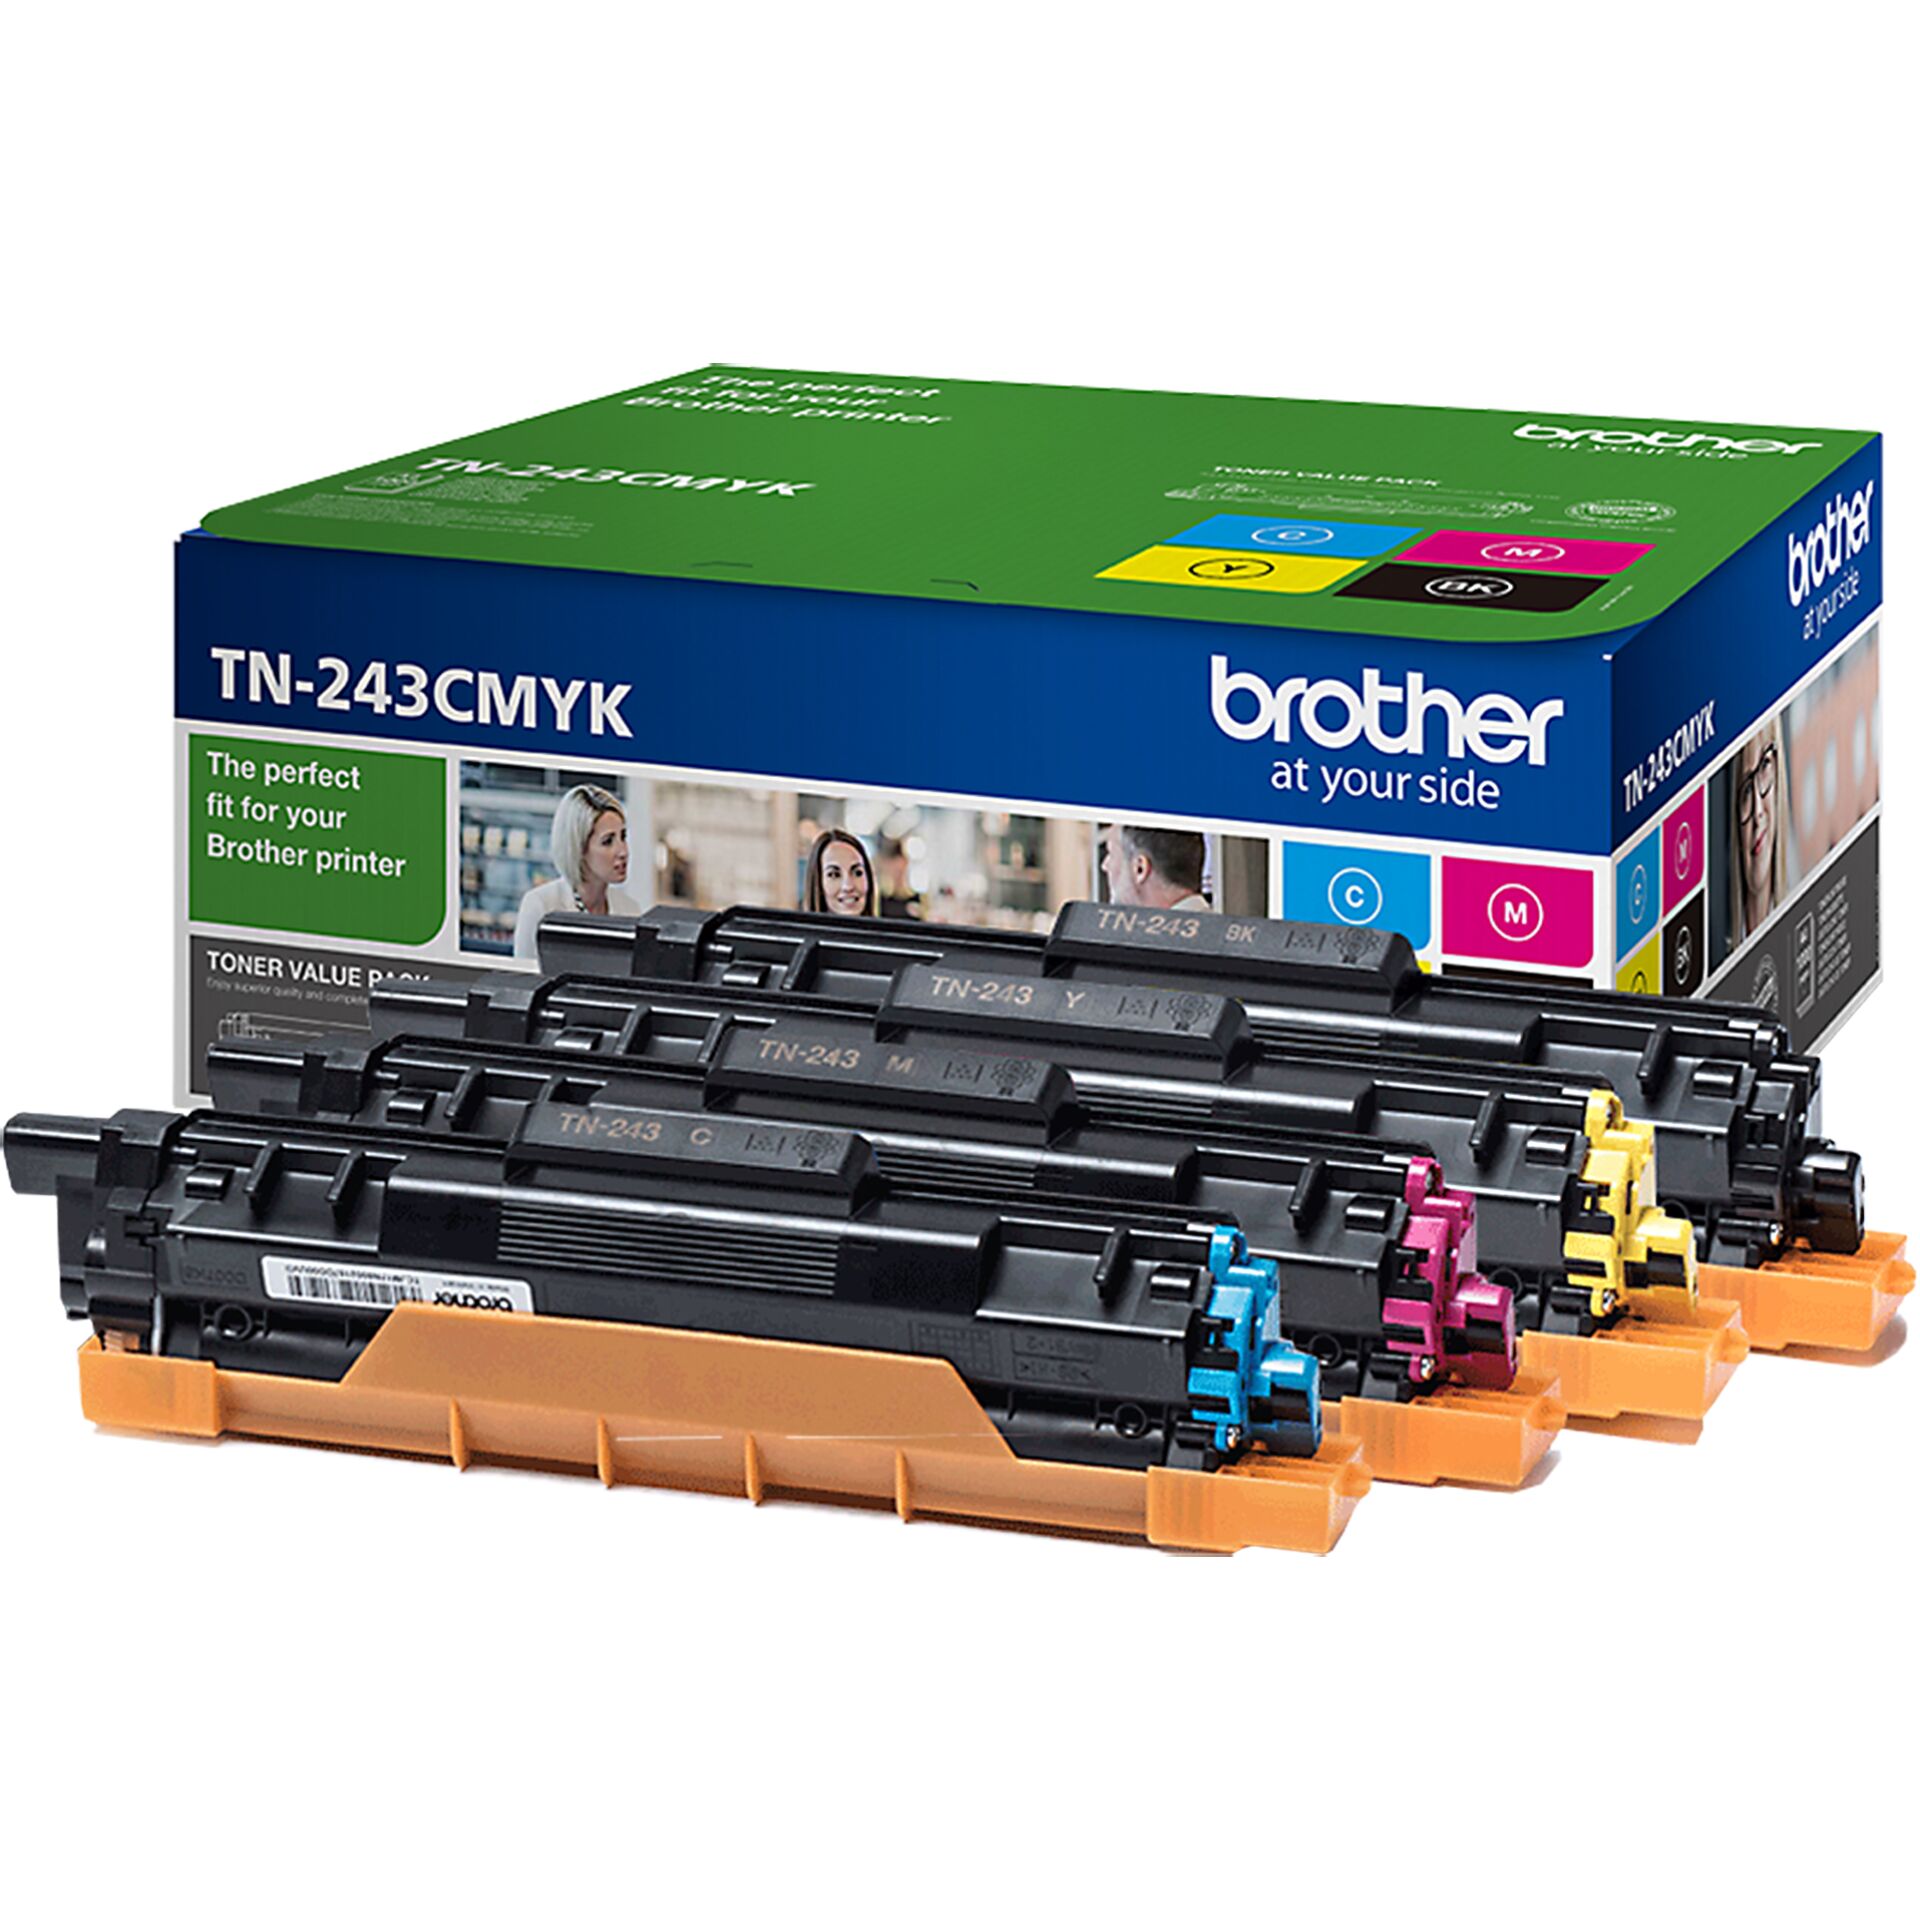 Brother Toner TN-243CMYK Rainbow Kit 